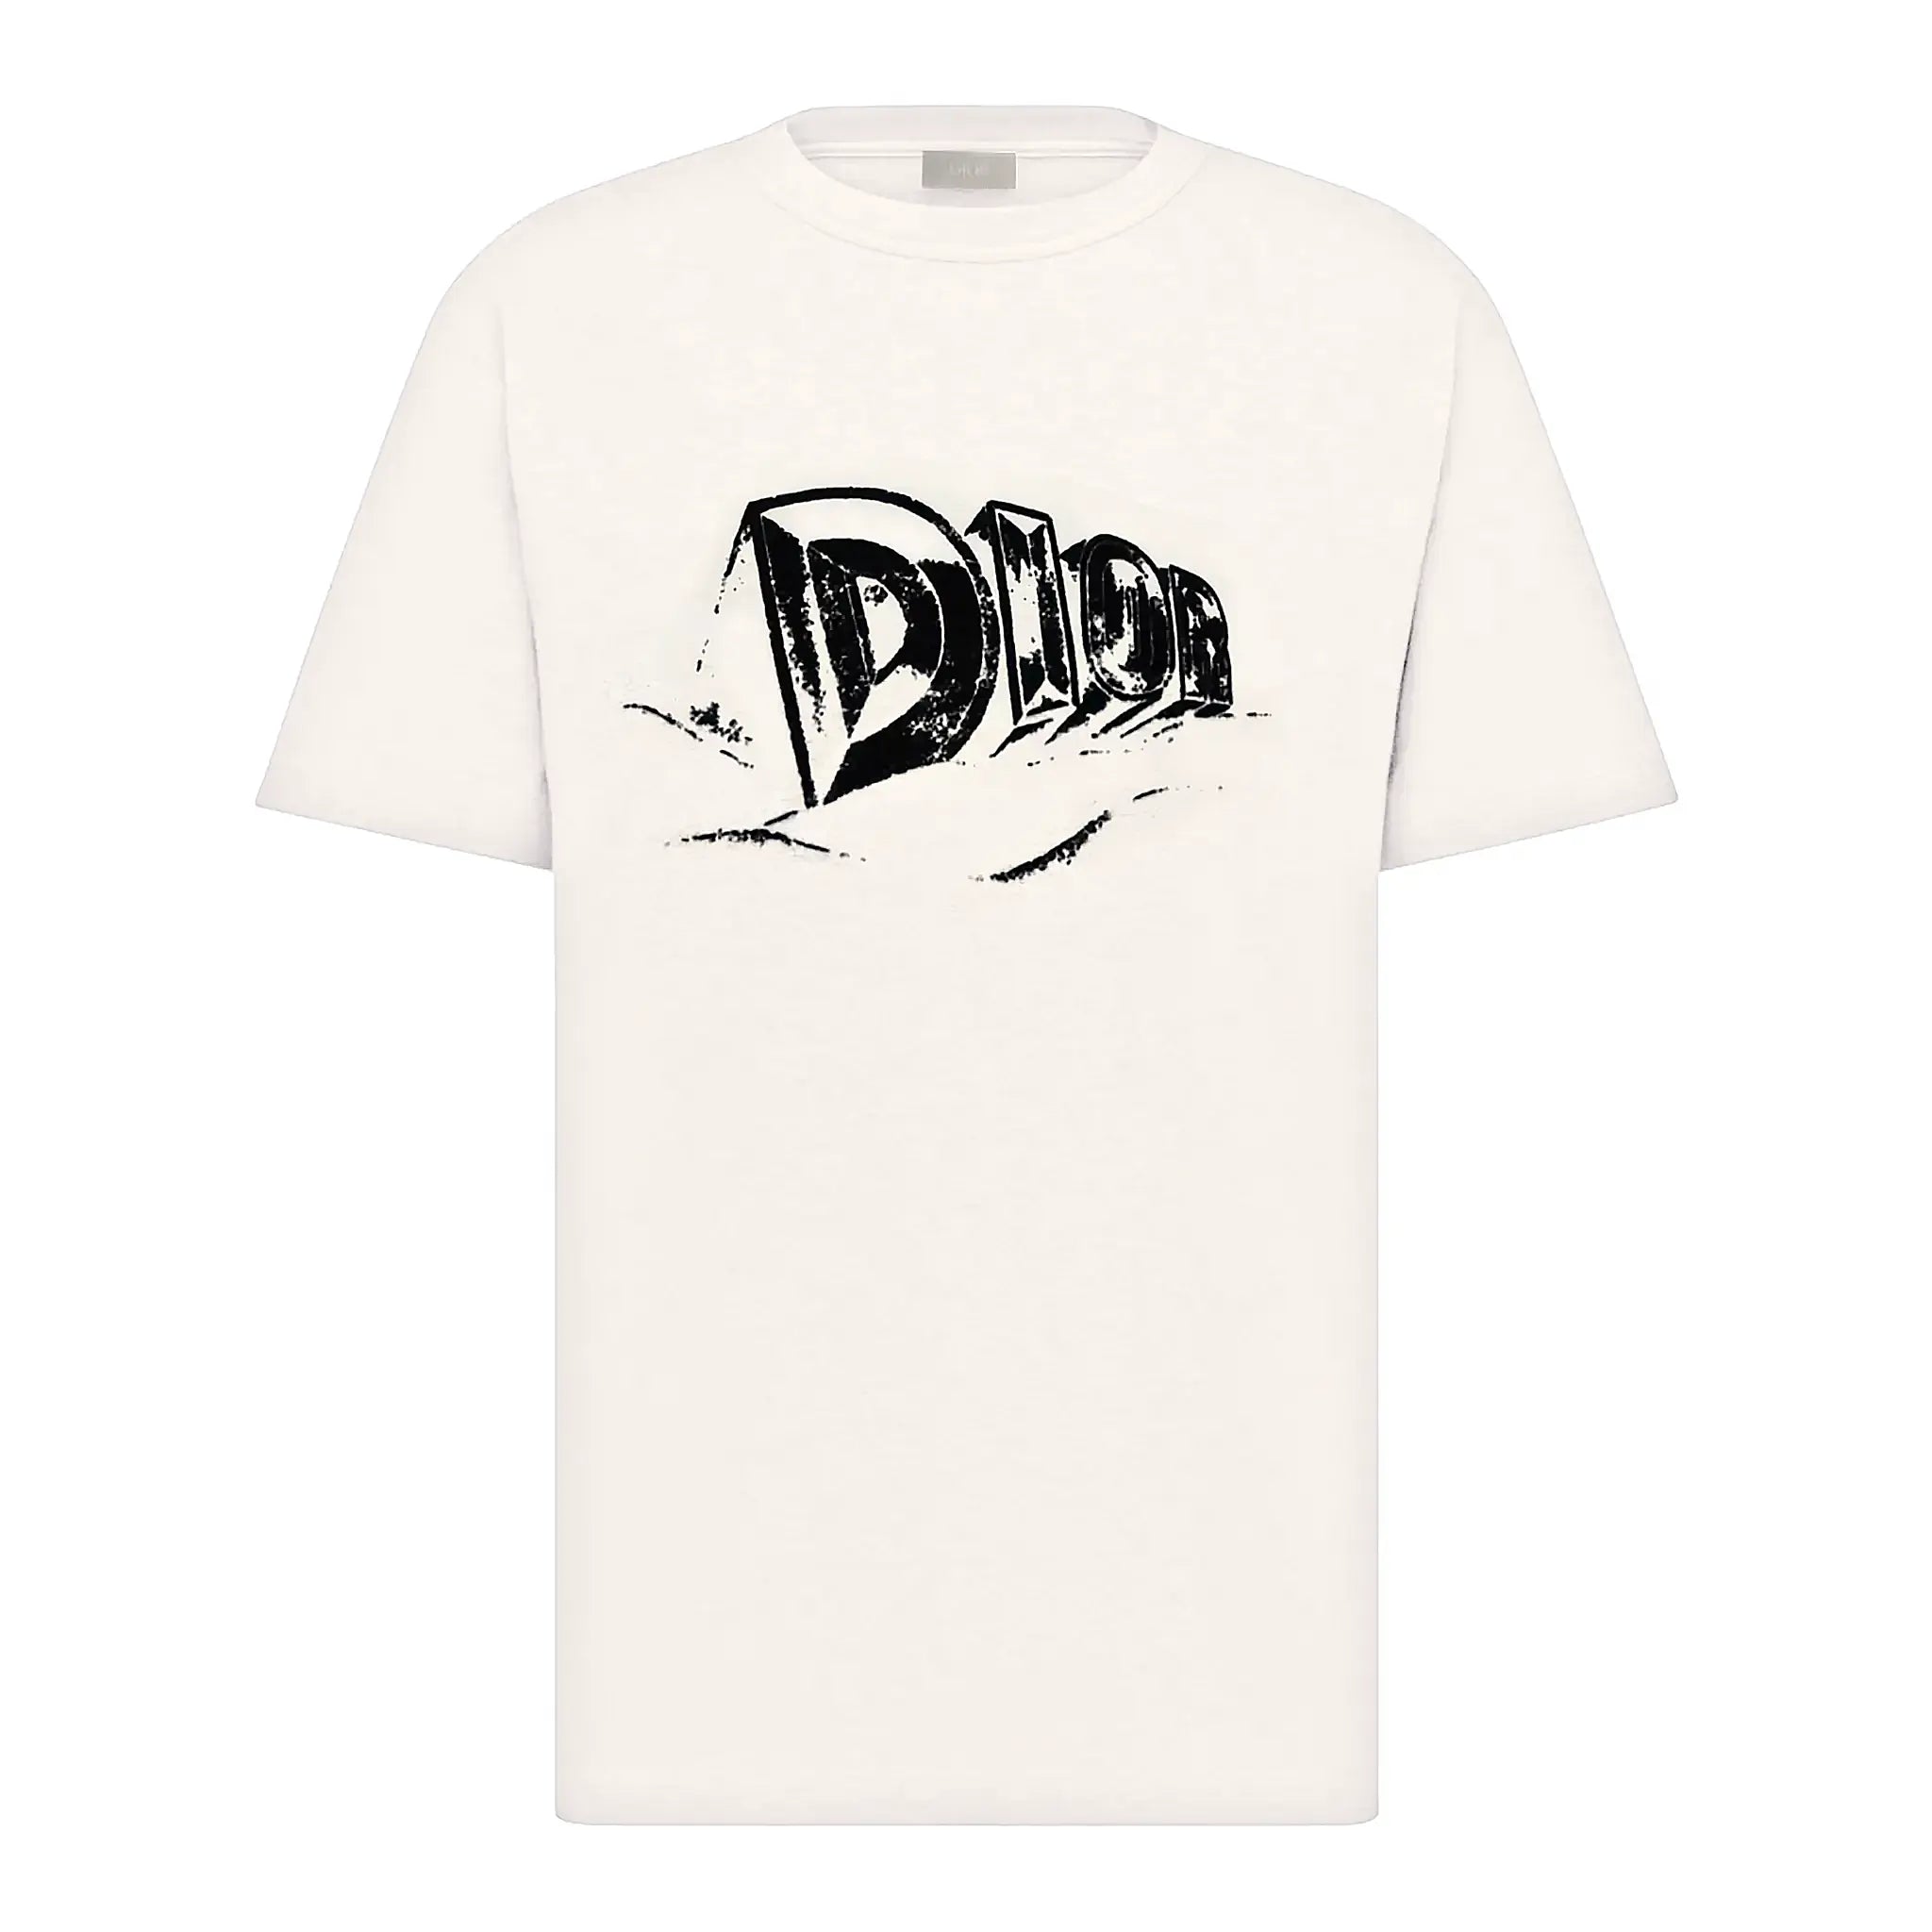 Front view of Dior Graffiti White T Shirt 393J696A0849_C089